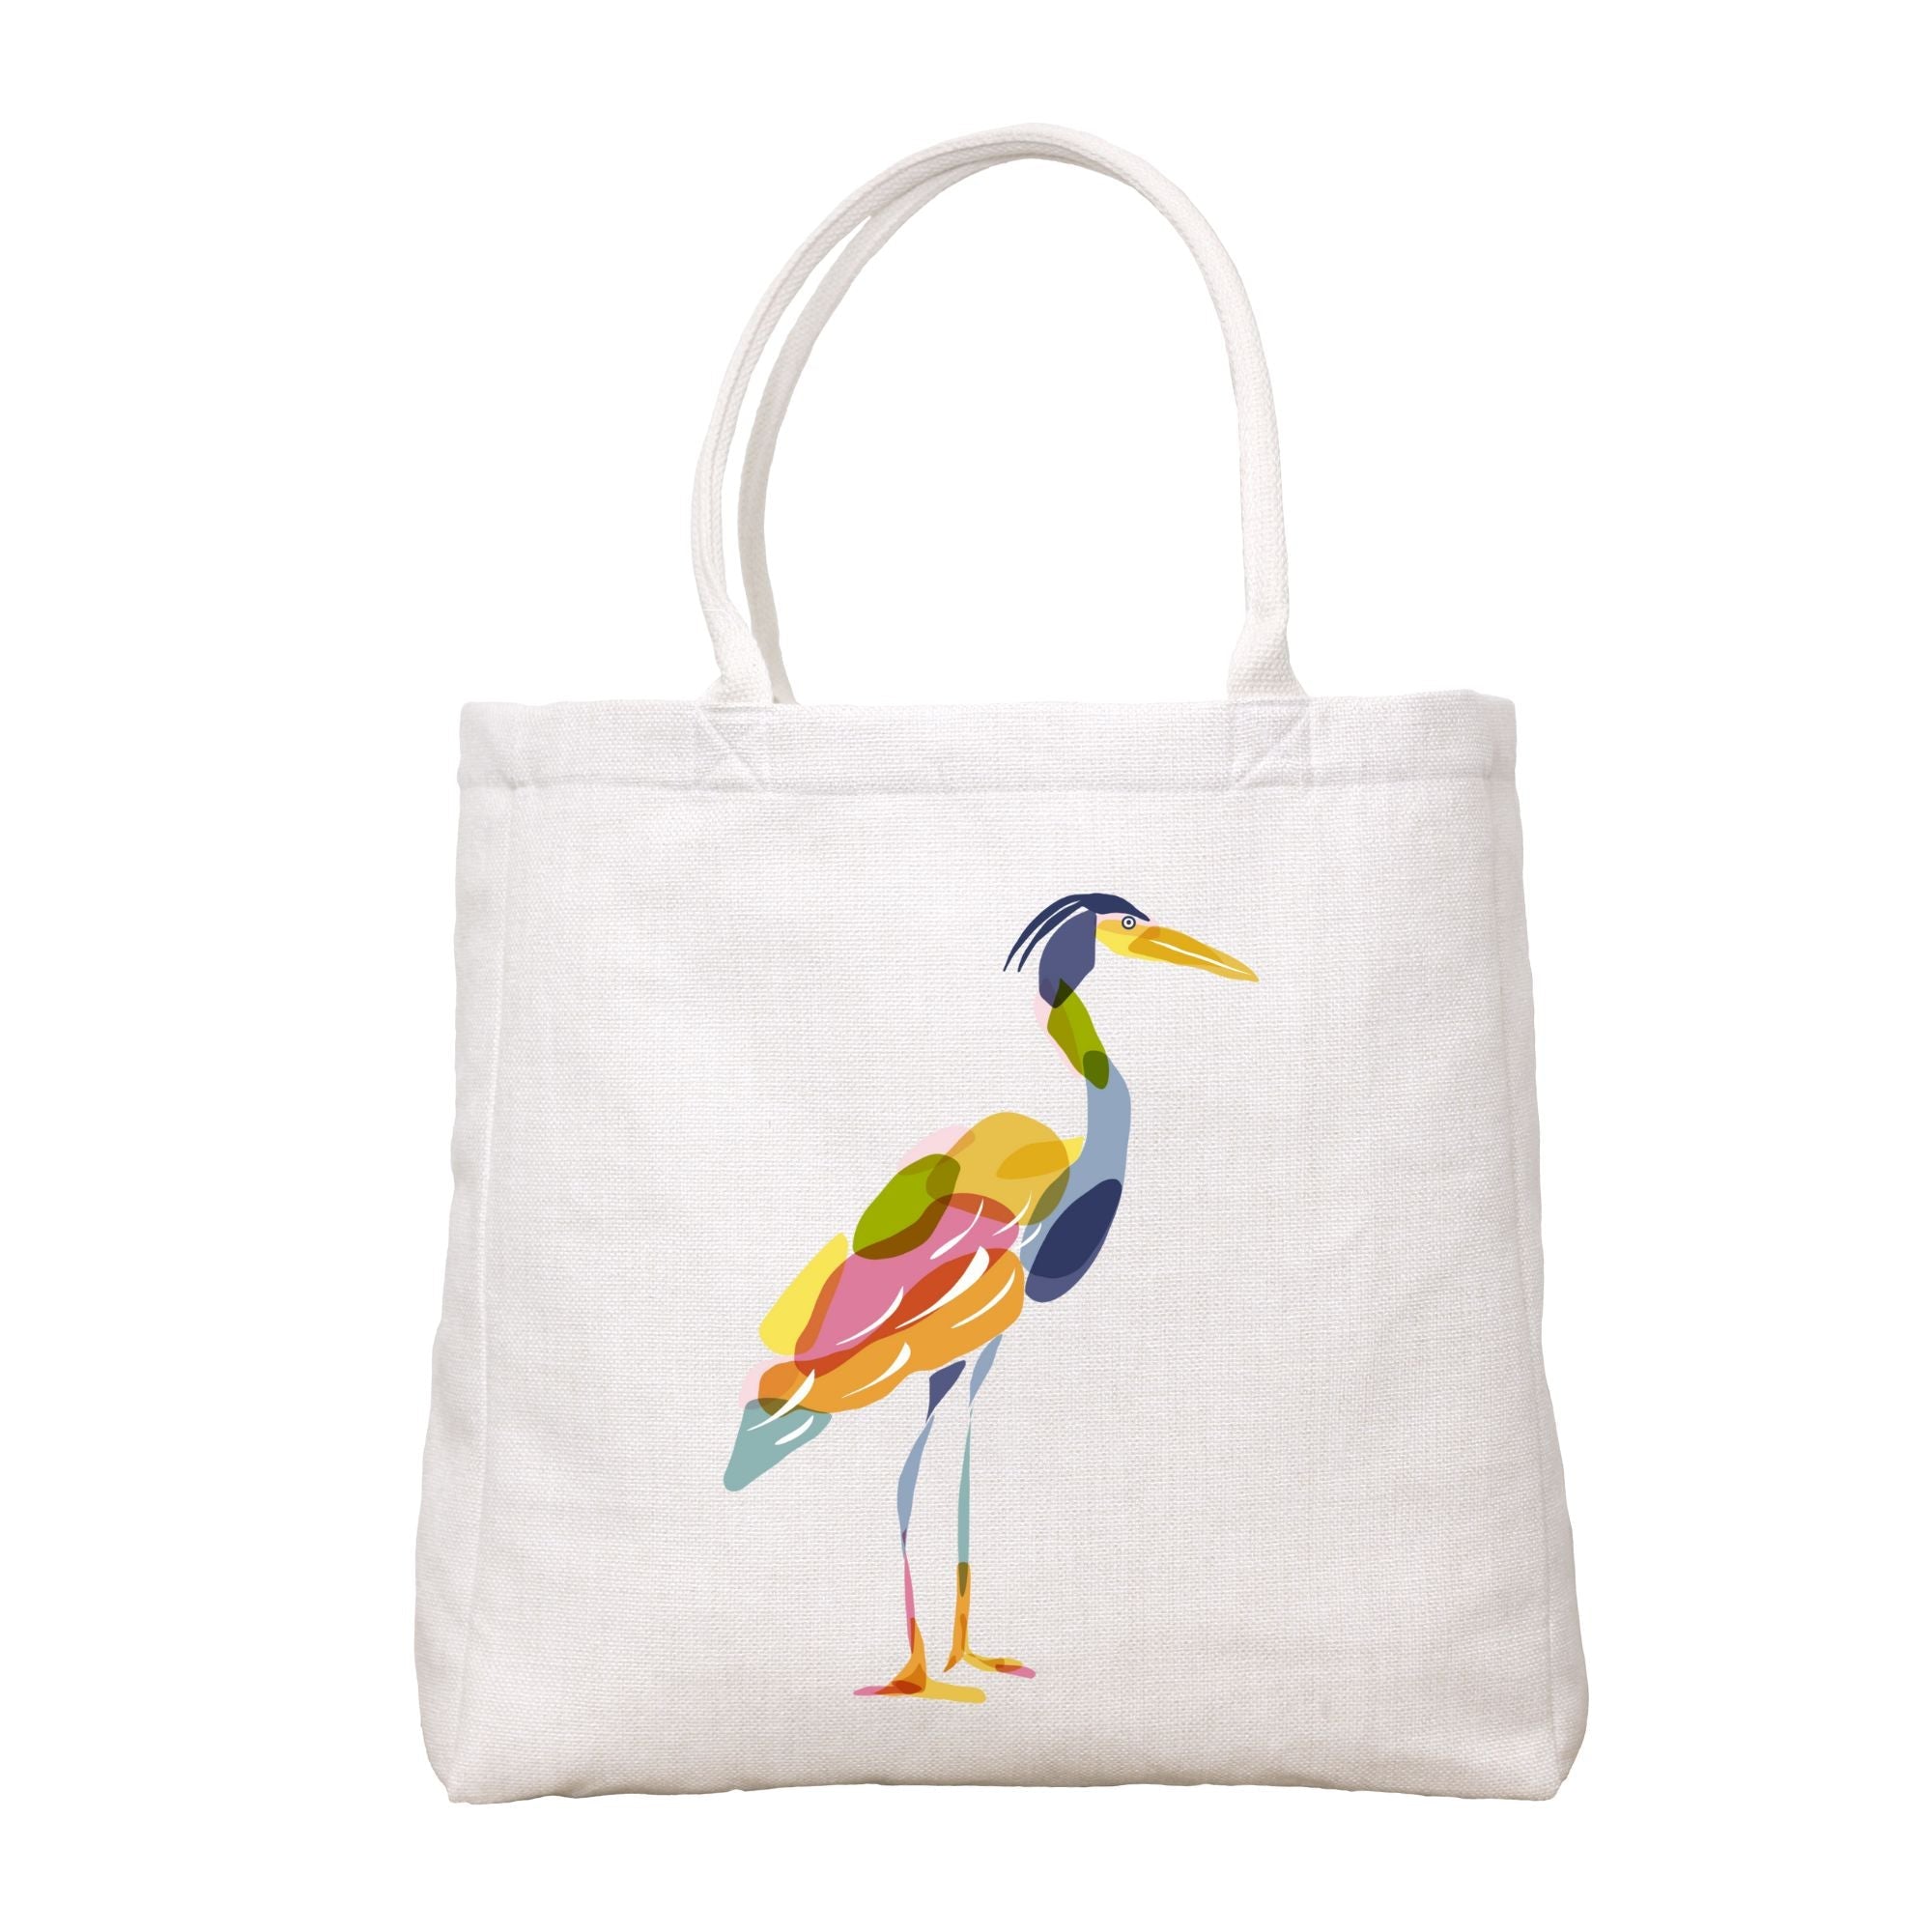 Abstract Heron Tote Bag